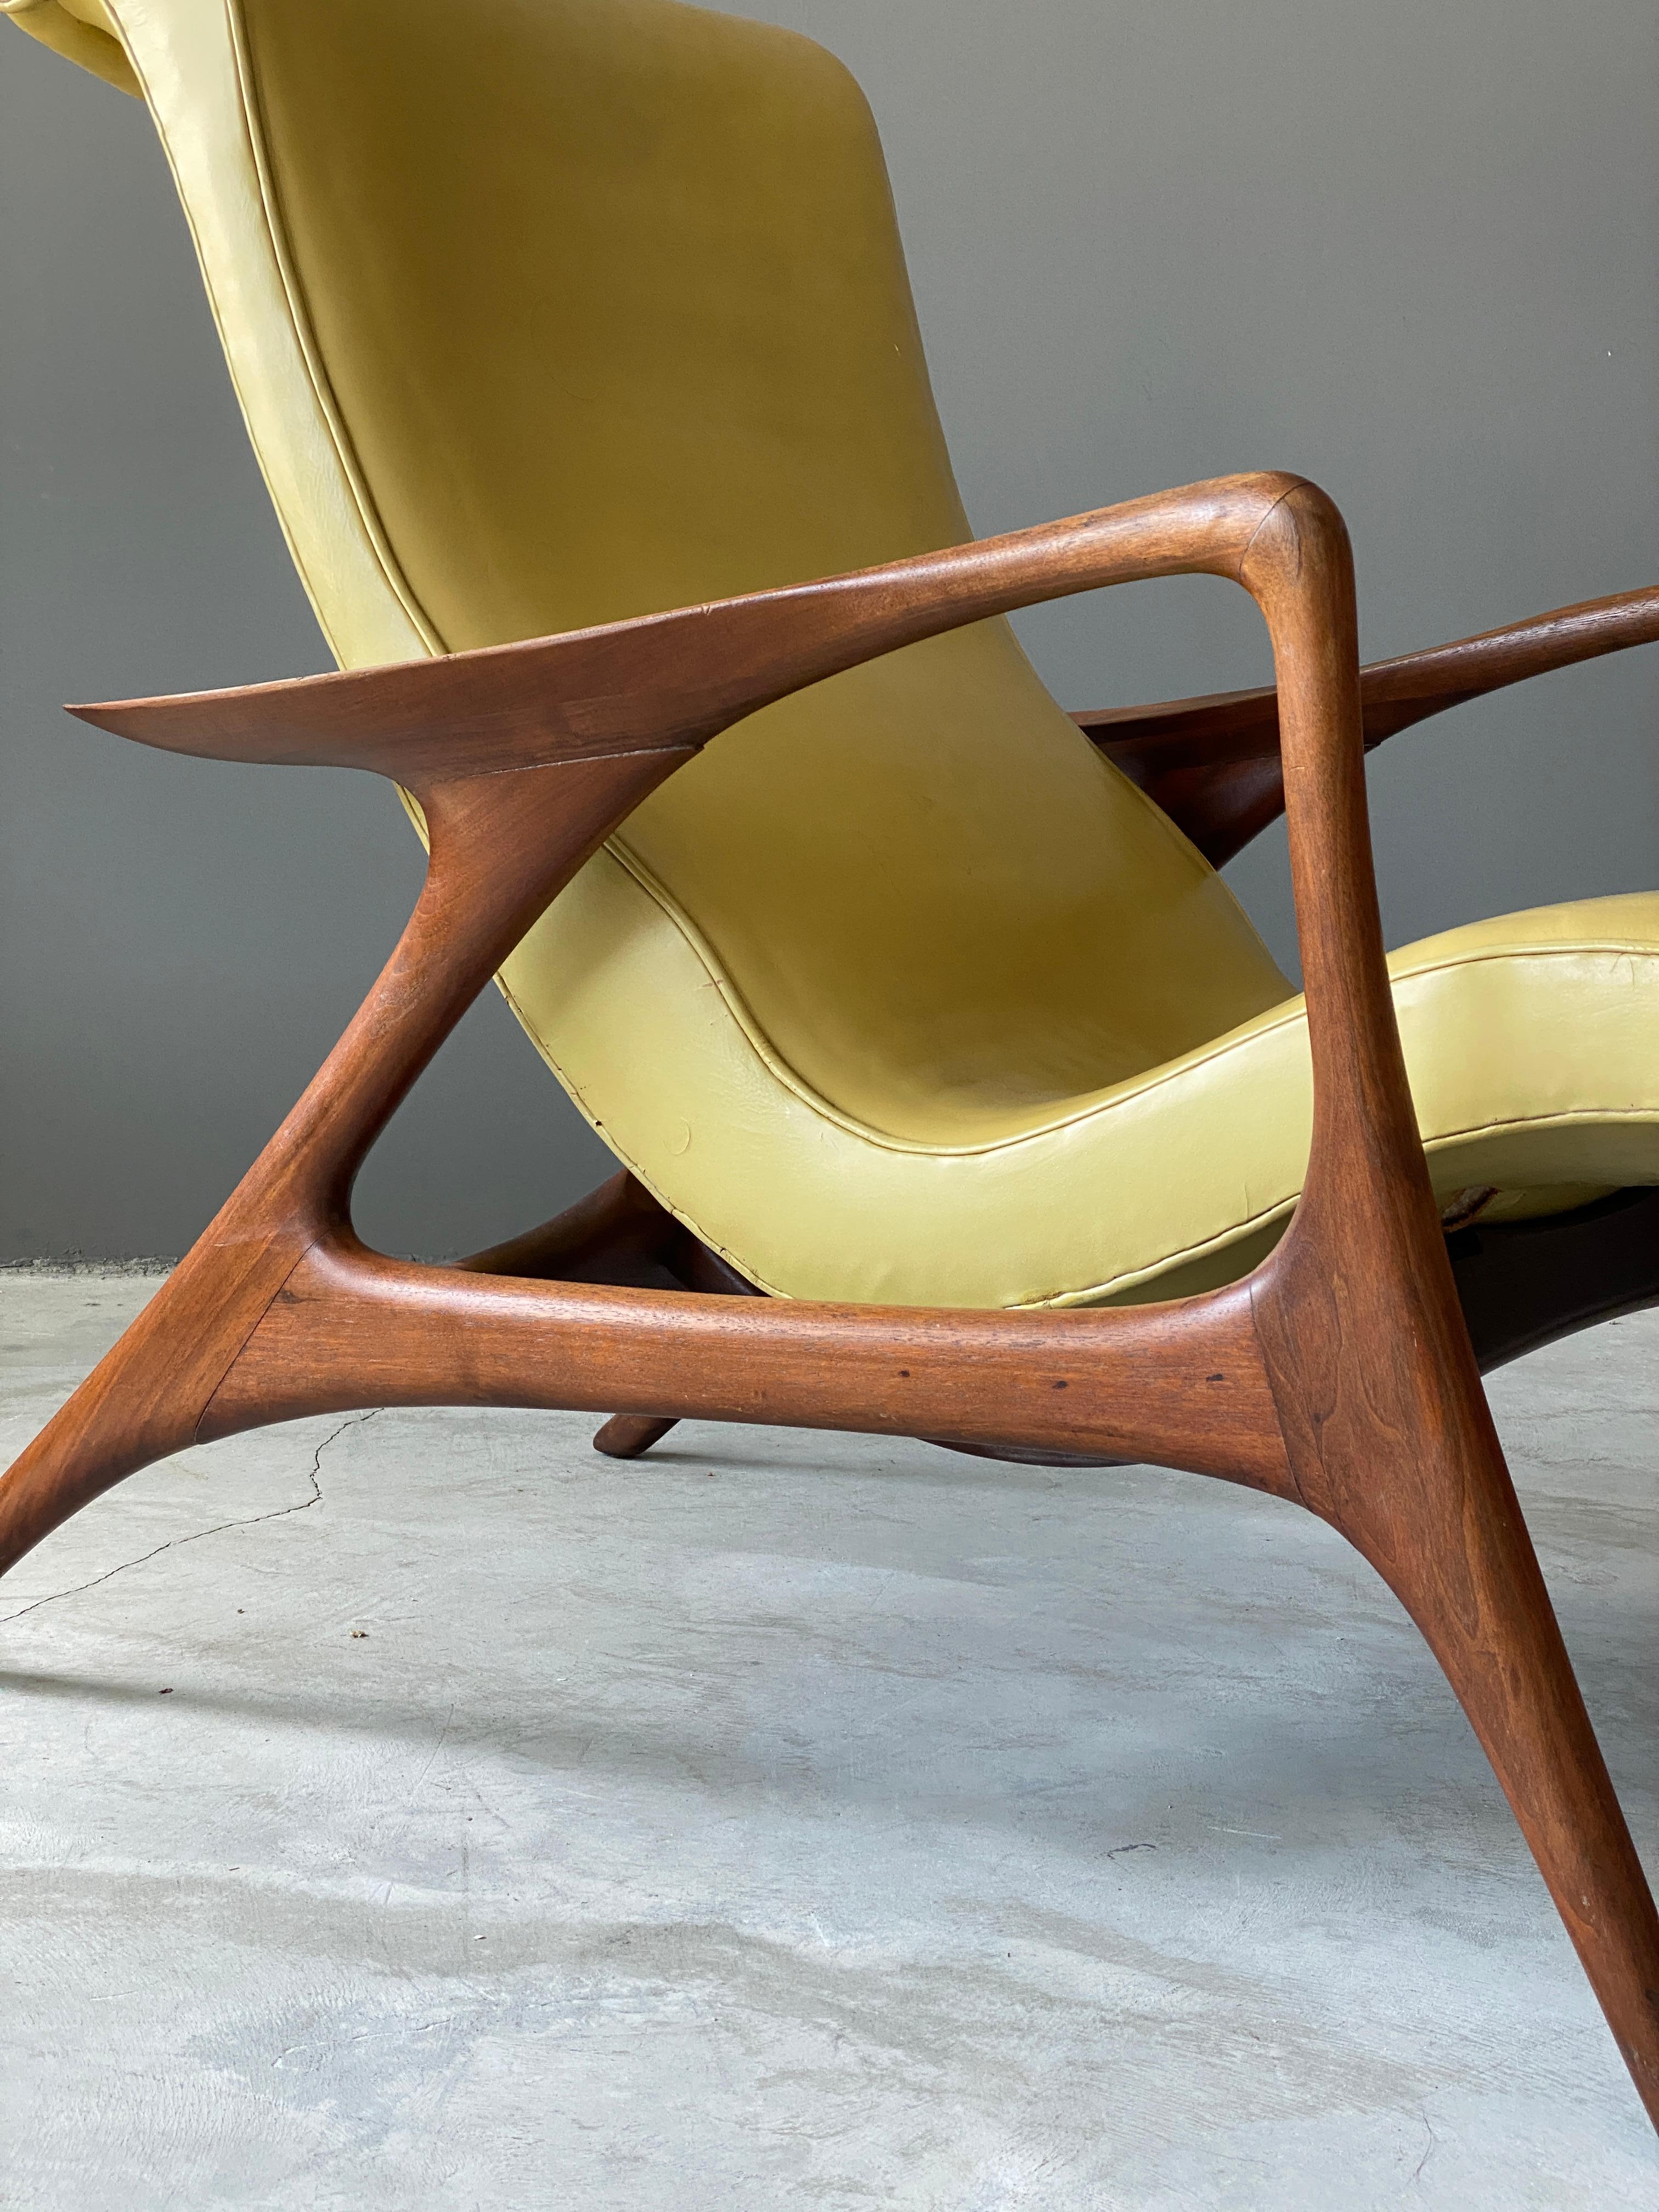 Mid-Century Modern Vladimir Kagan, Early Contour Lounge Chair, Walnut, Yellow Leather, Studio, 1953